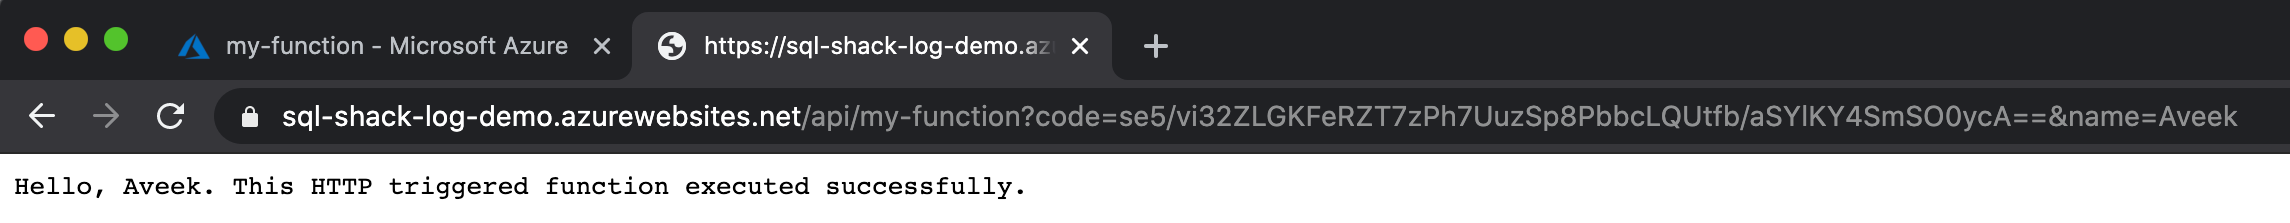 Running the latest code